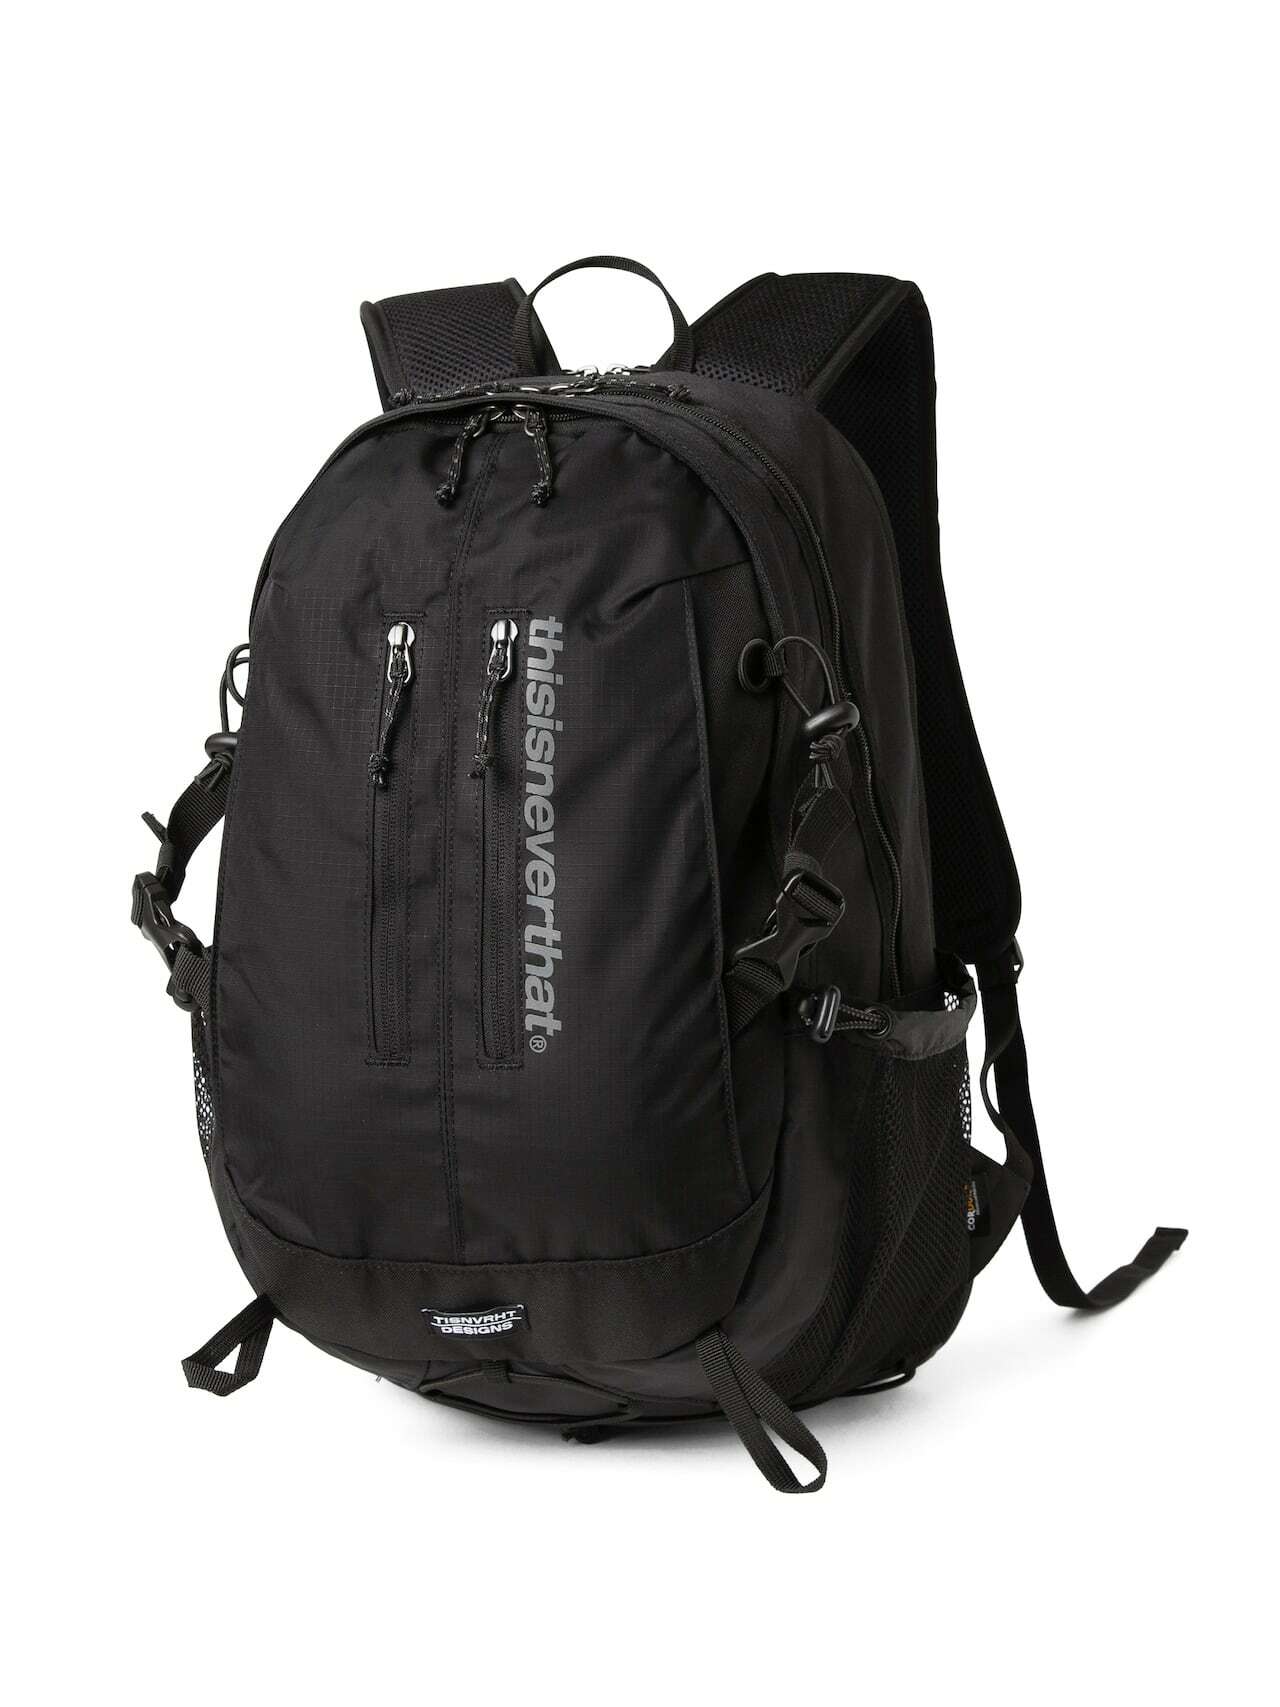 SP-Backpack-29-BLACK1.jpg